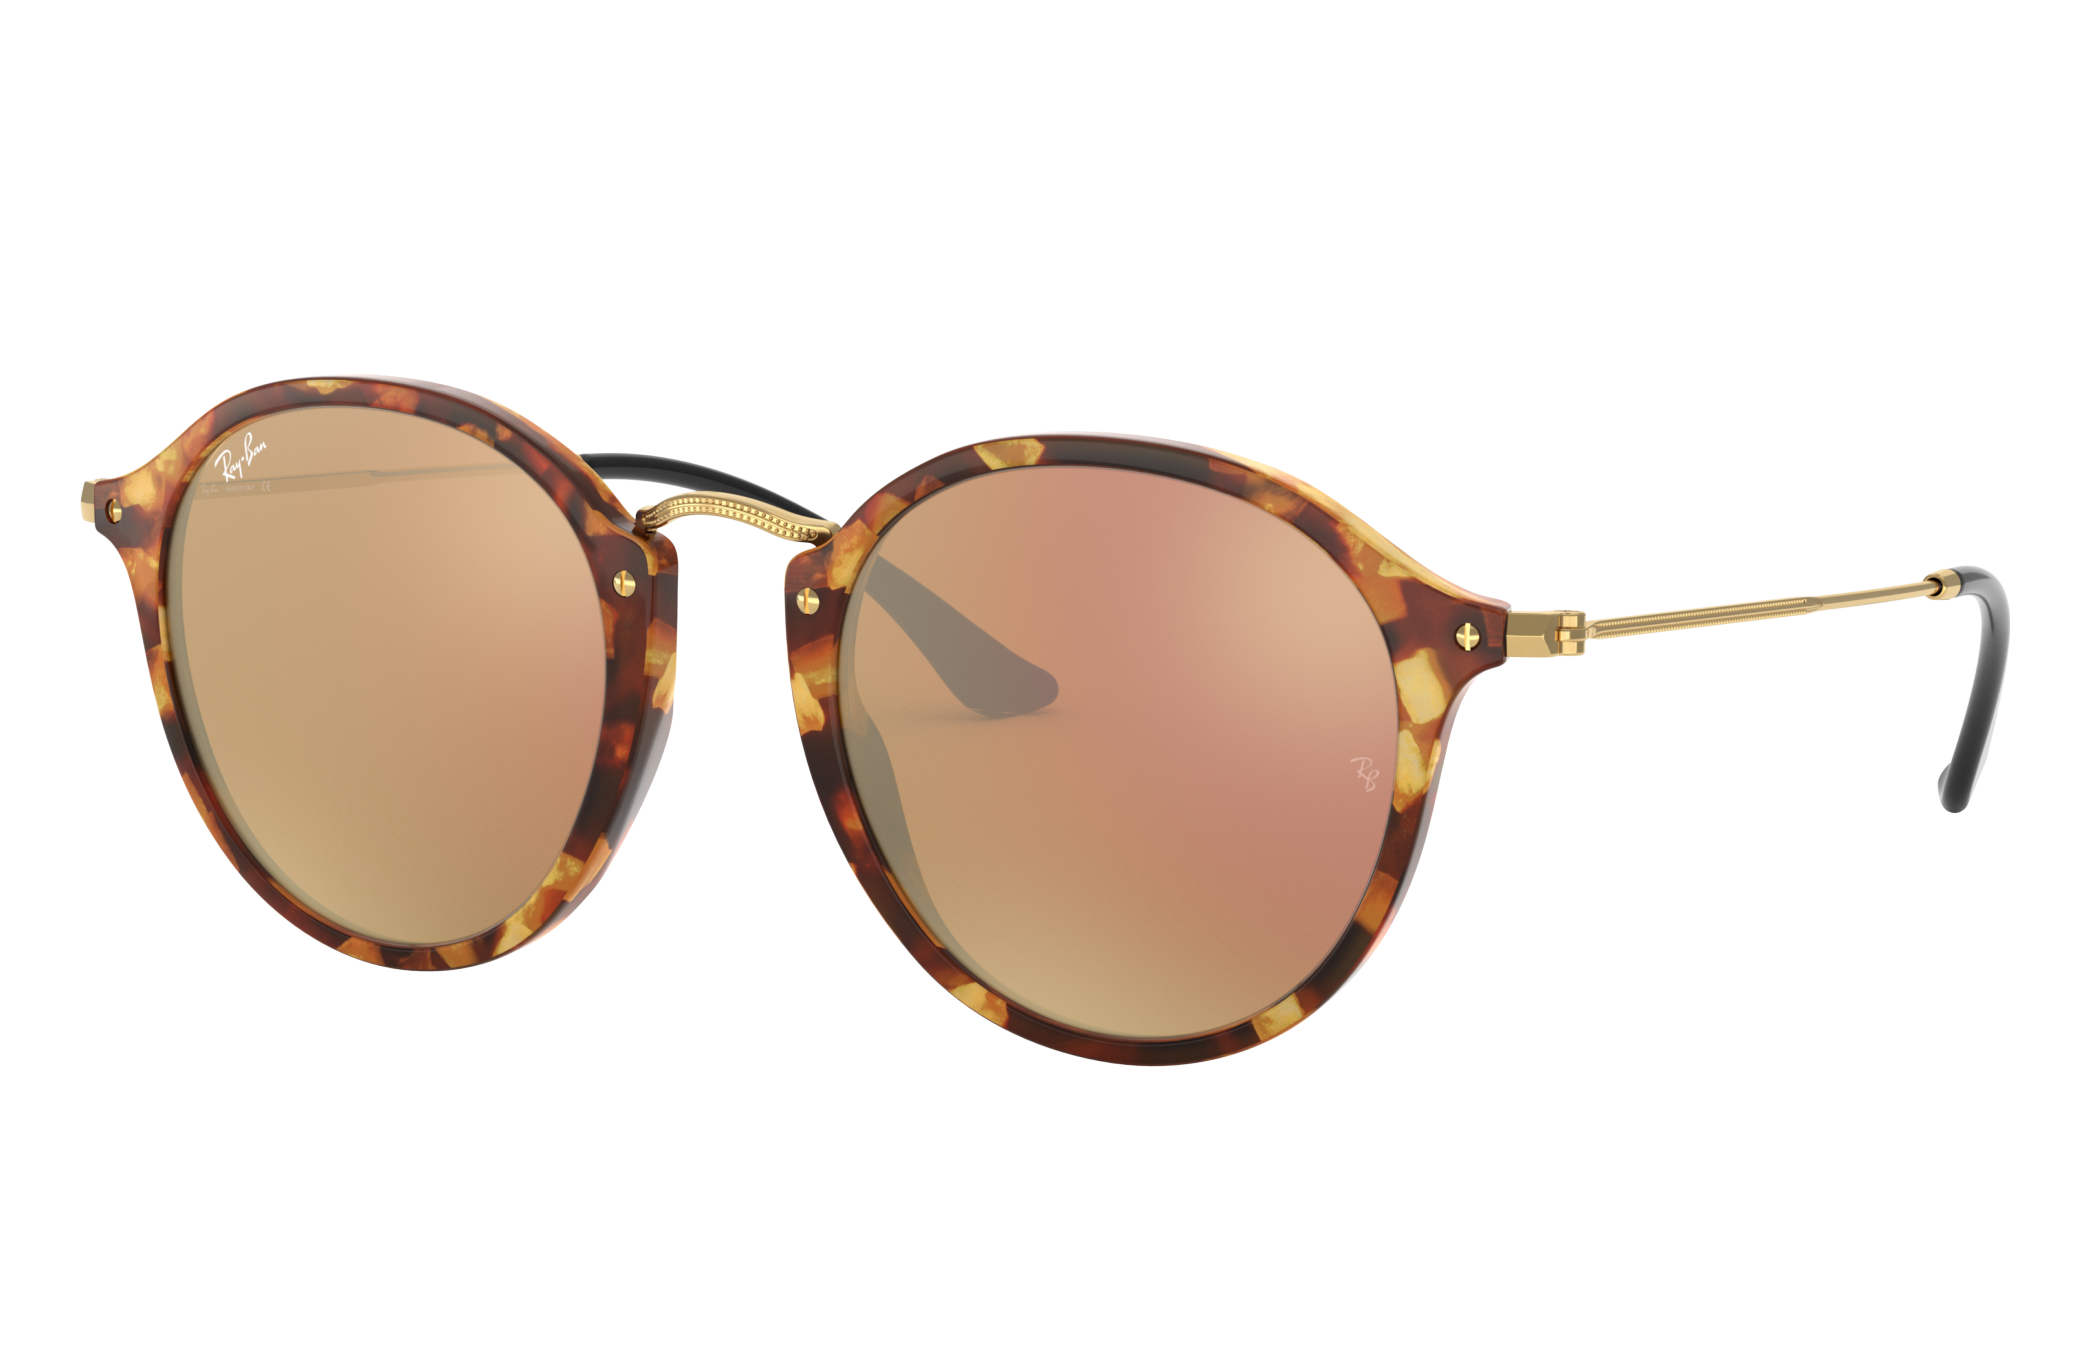 Round Fleck @collection Sunglasses in Tartaruga and Cobre | Ray-Ban®